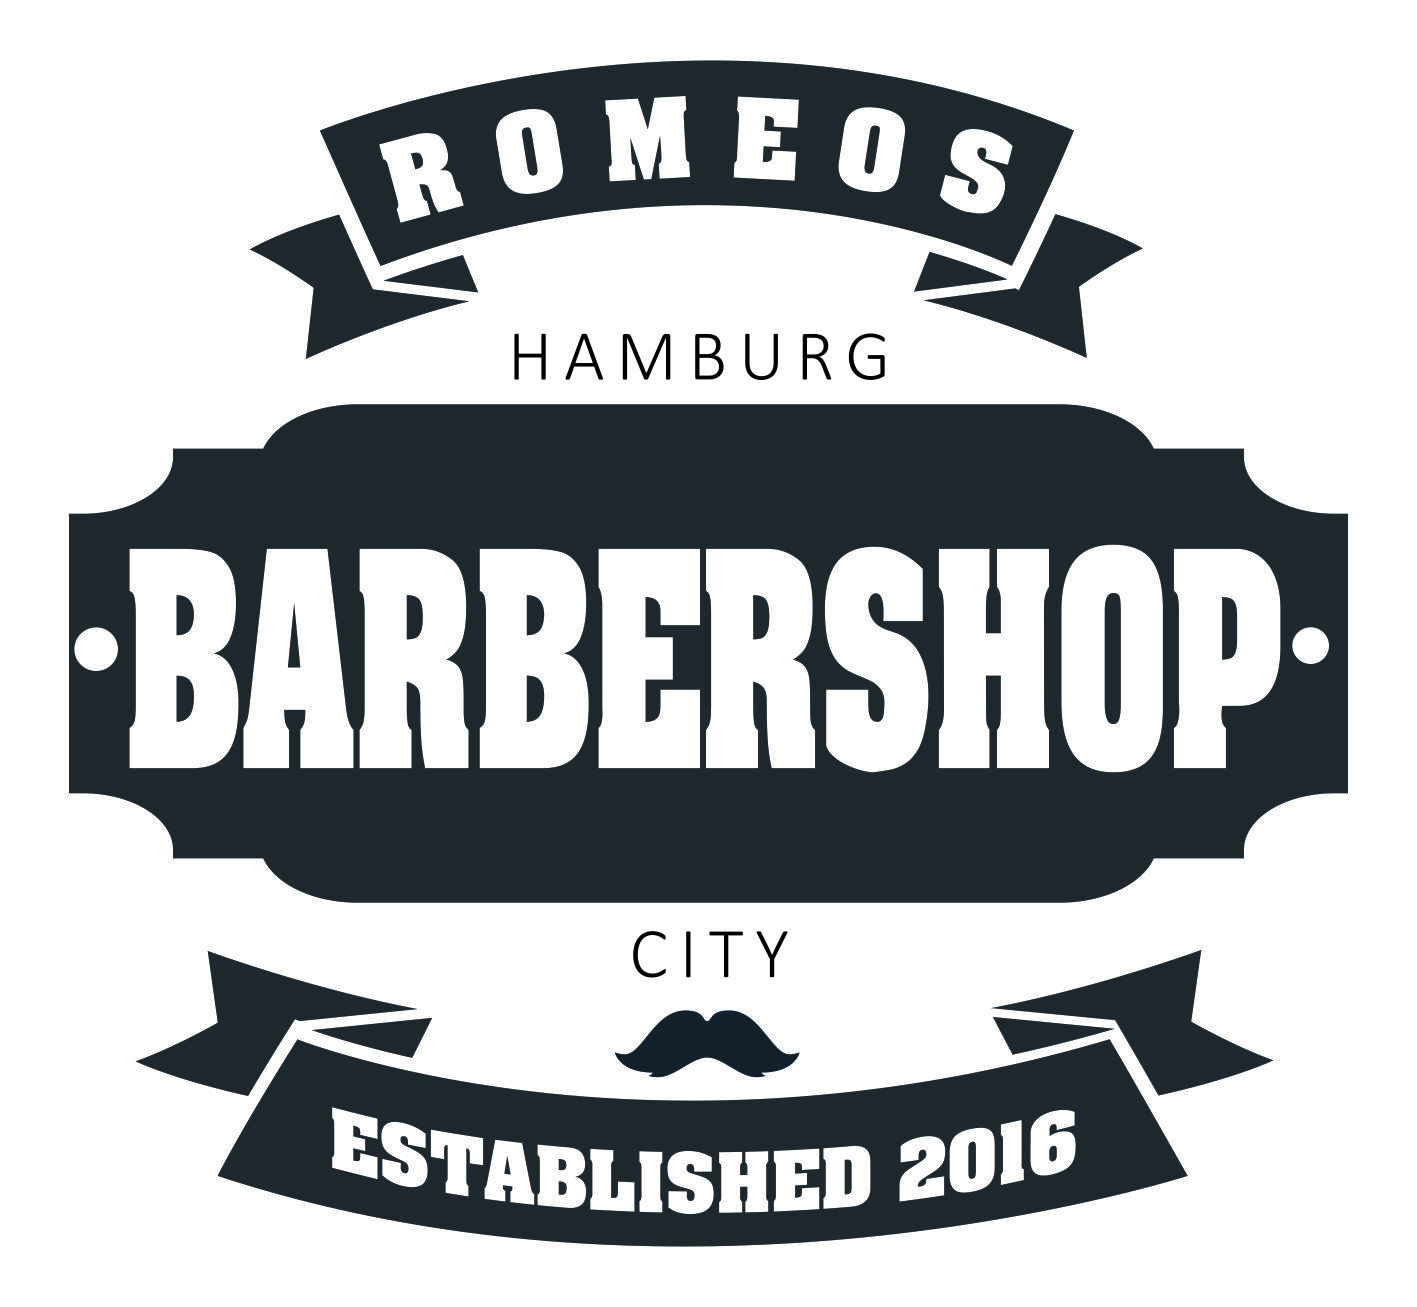 Romeos barbershop logo